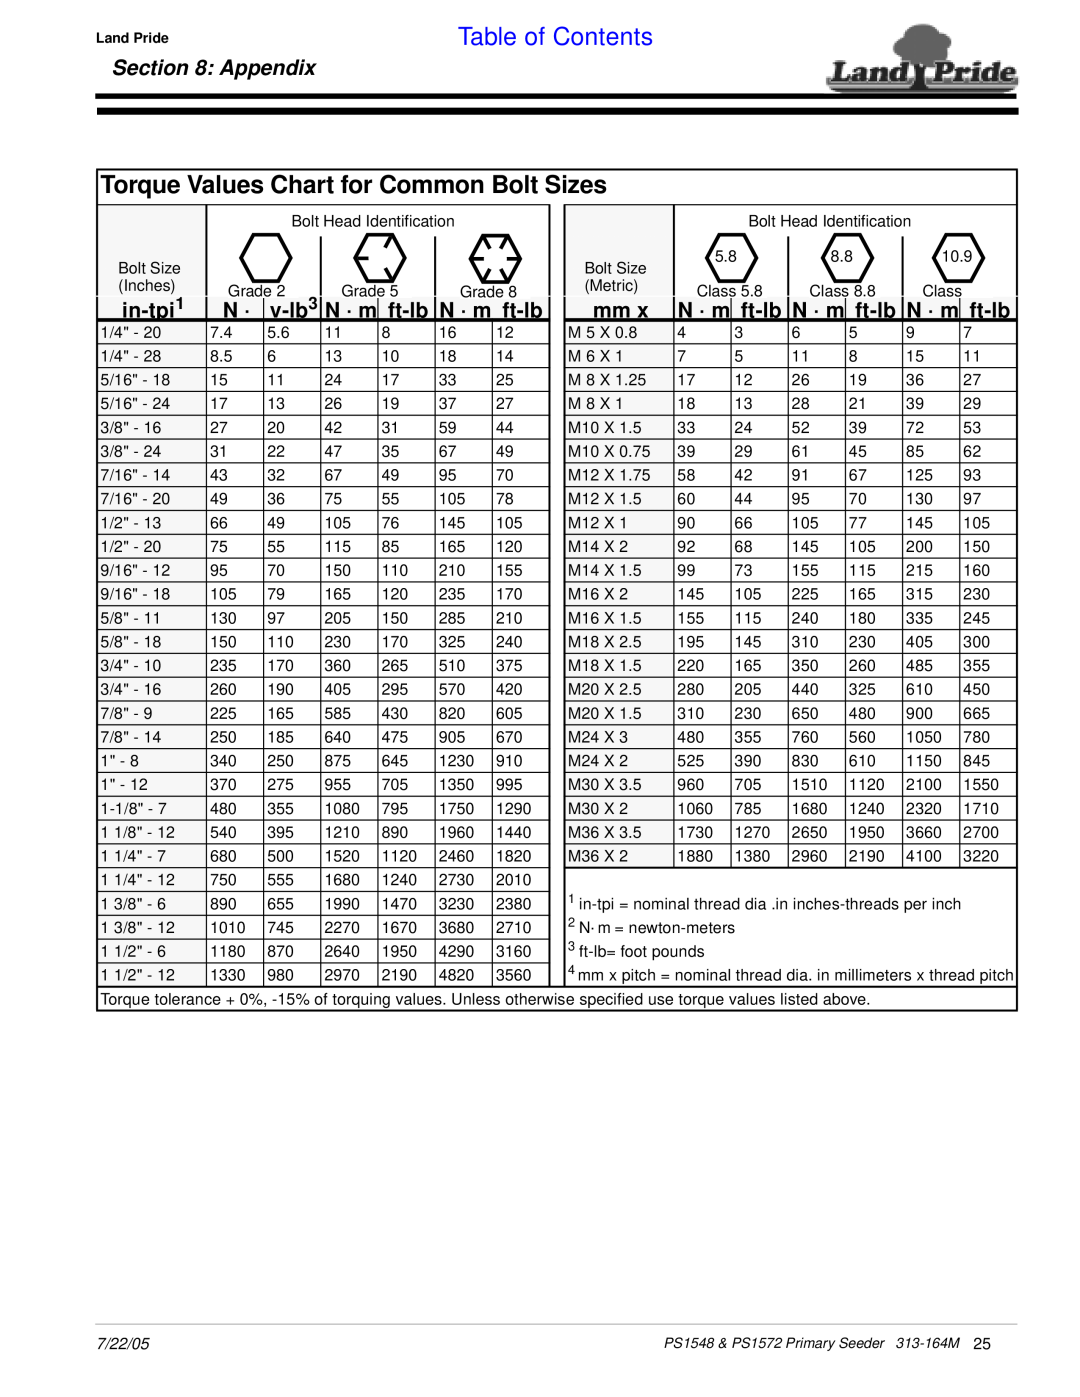 Land Pride PS1572, PS1548 manual Torque Values Chart for Common Bolt Sizes, Appendix, in-tpi, v-lb 3 N · m ft-lb N · m ft-lb 